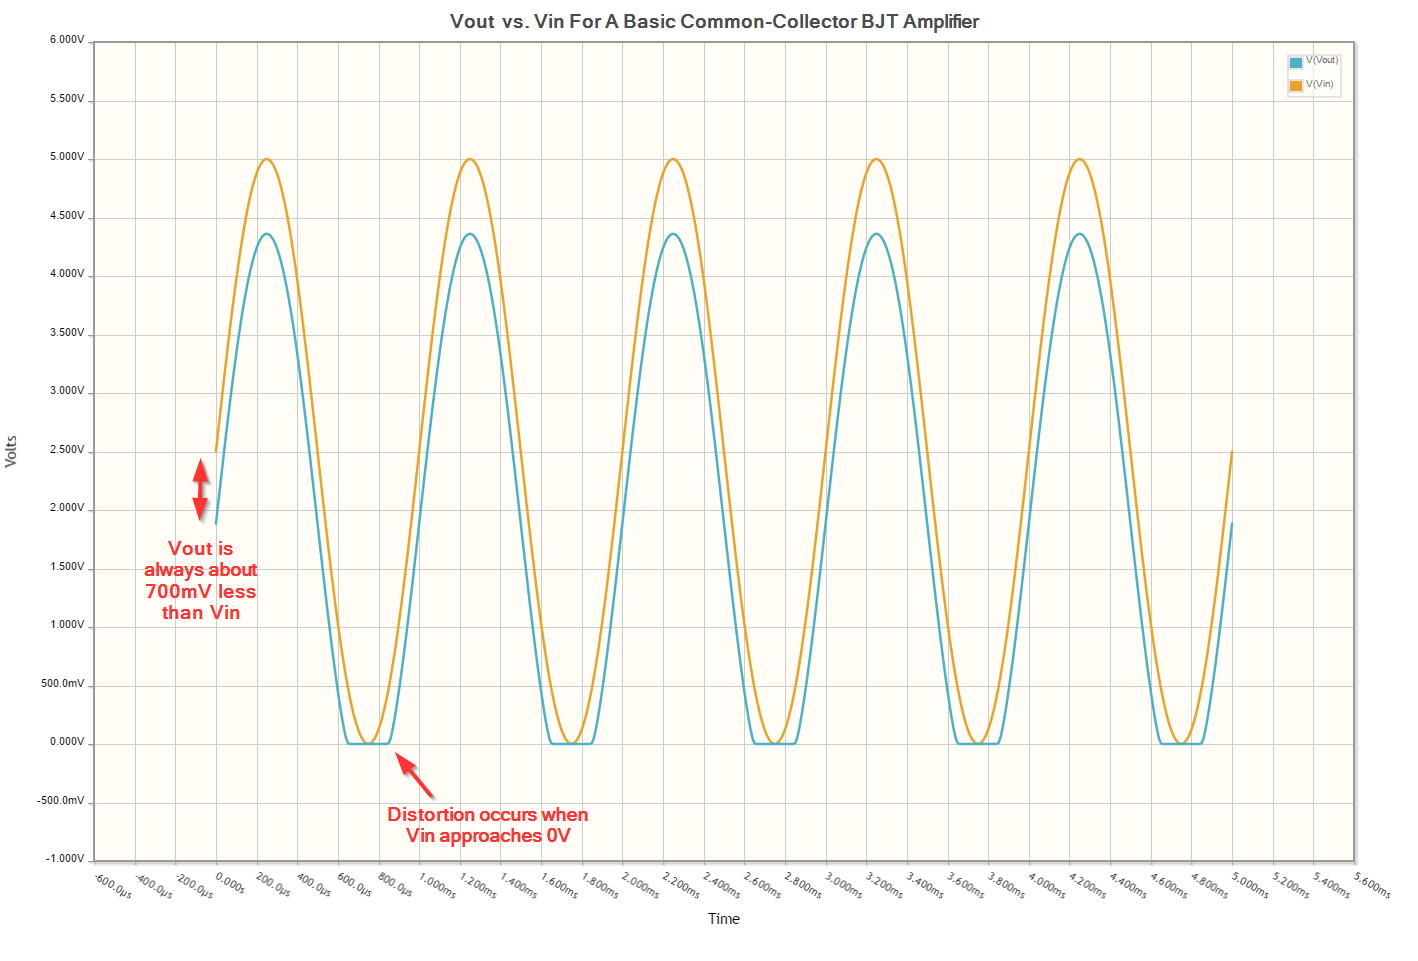 Vout vs. Vin for a basic common-collector BJT amplifier.